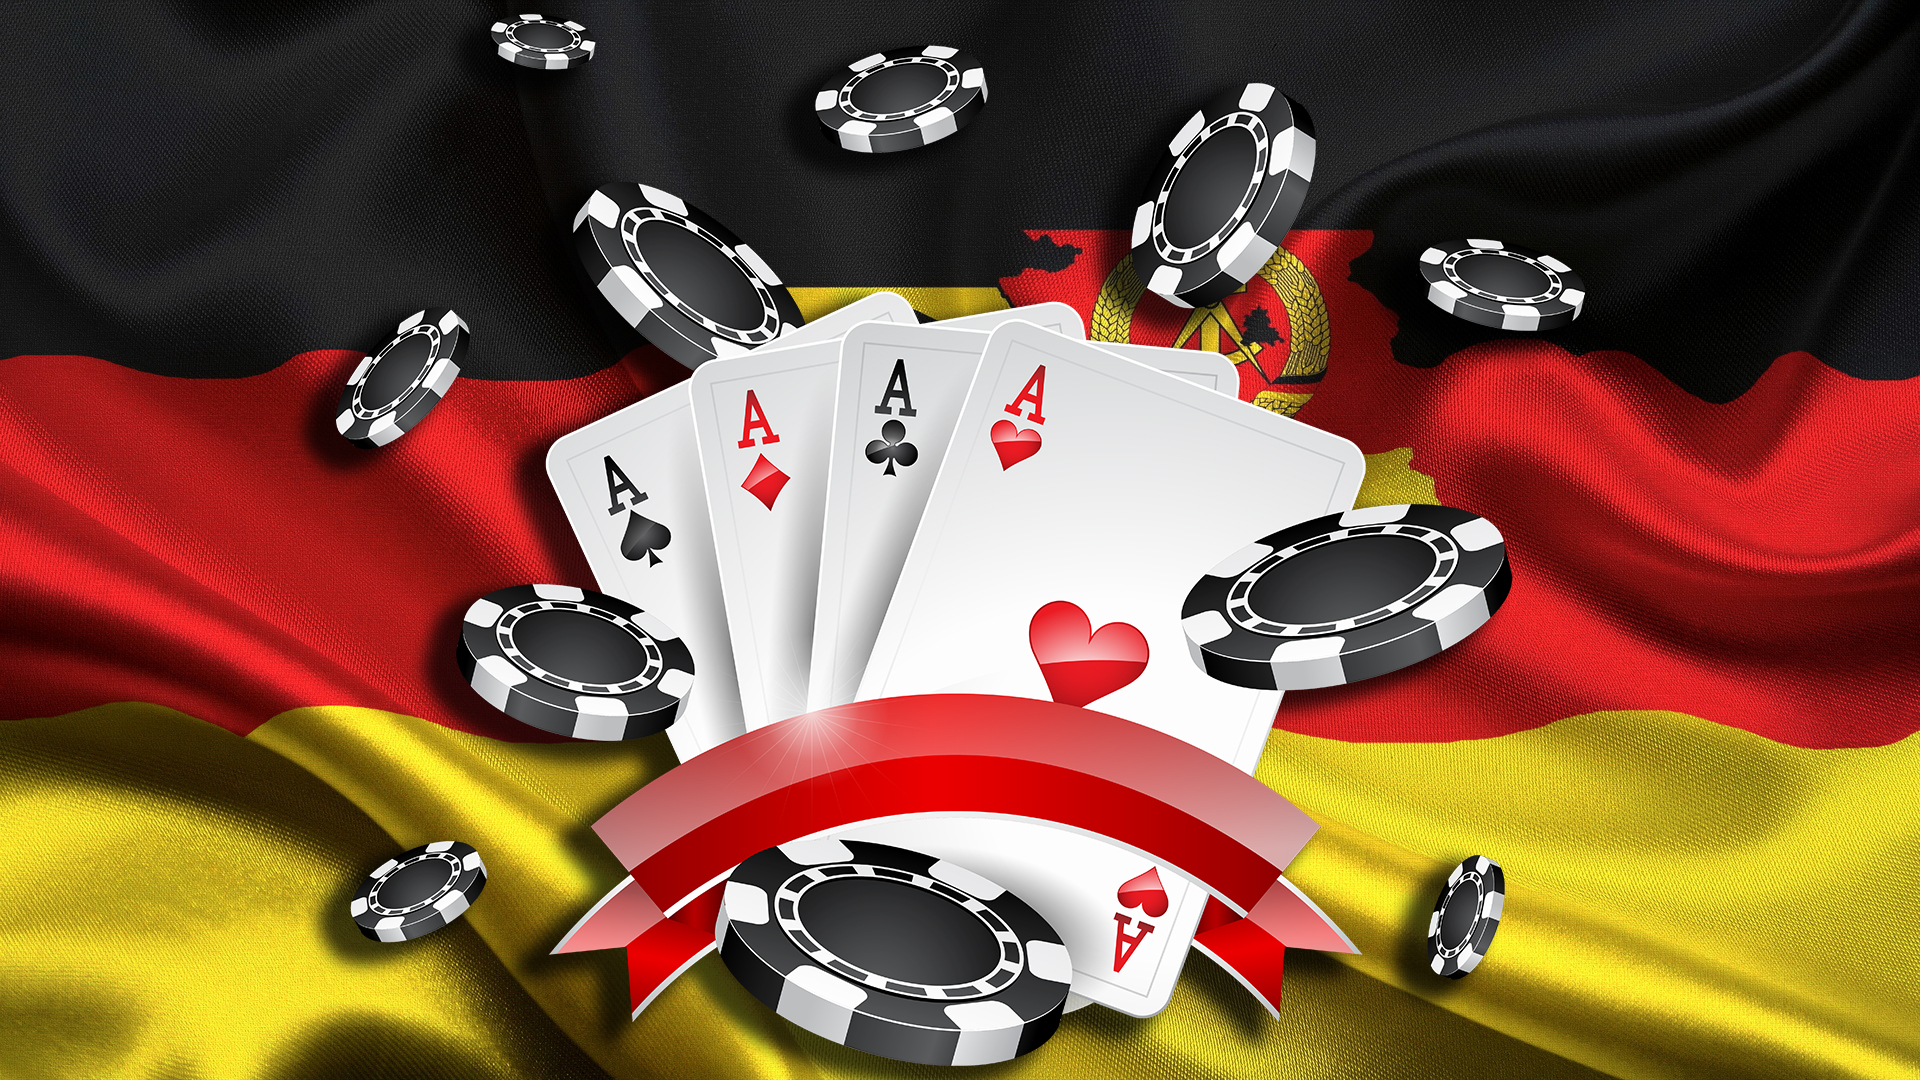 Casino online deutschland вулкан джекпот бездепозитный бонус